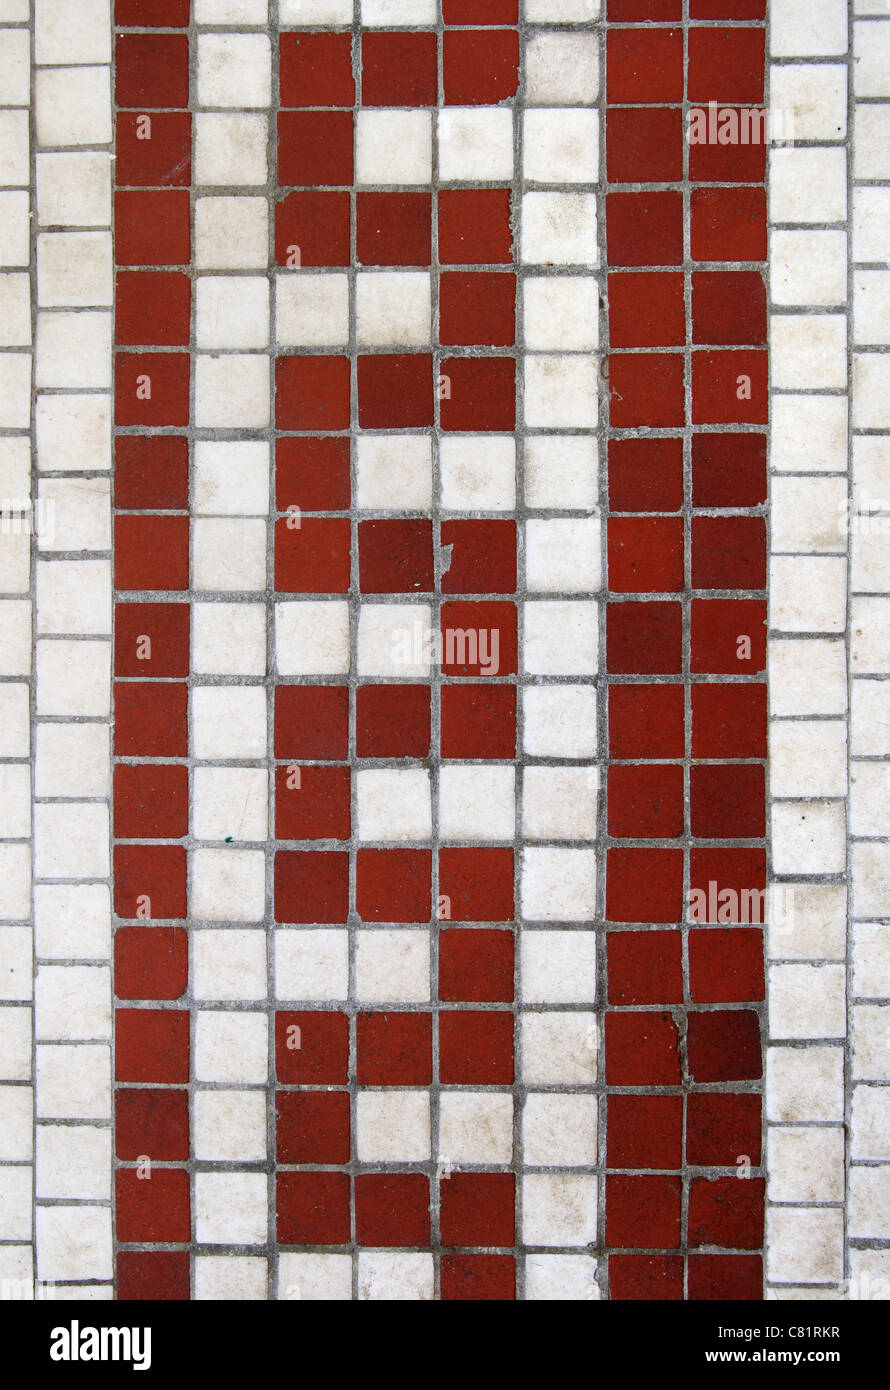 old red serpentine tiled design on white tile background Stock Photo